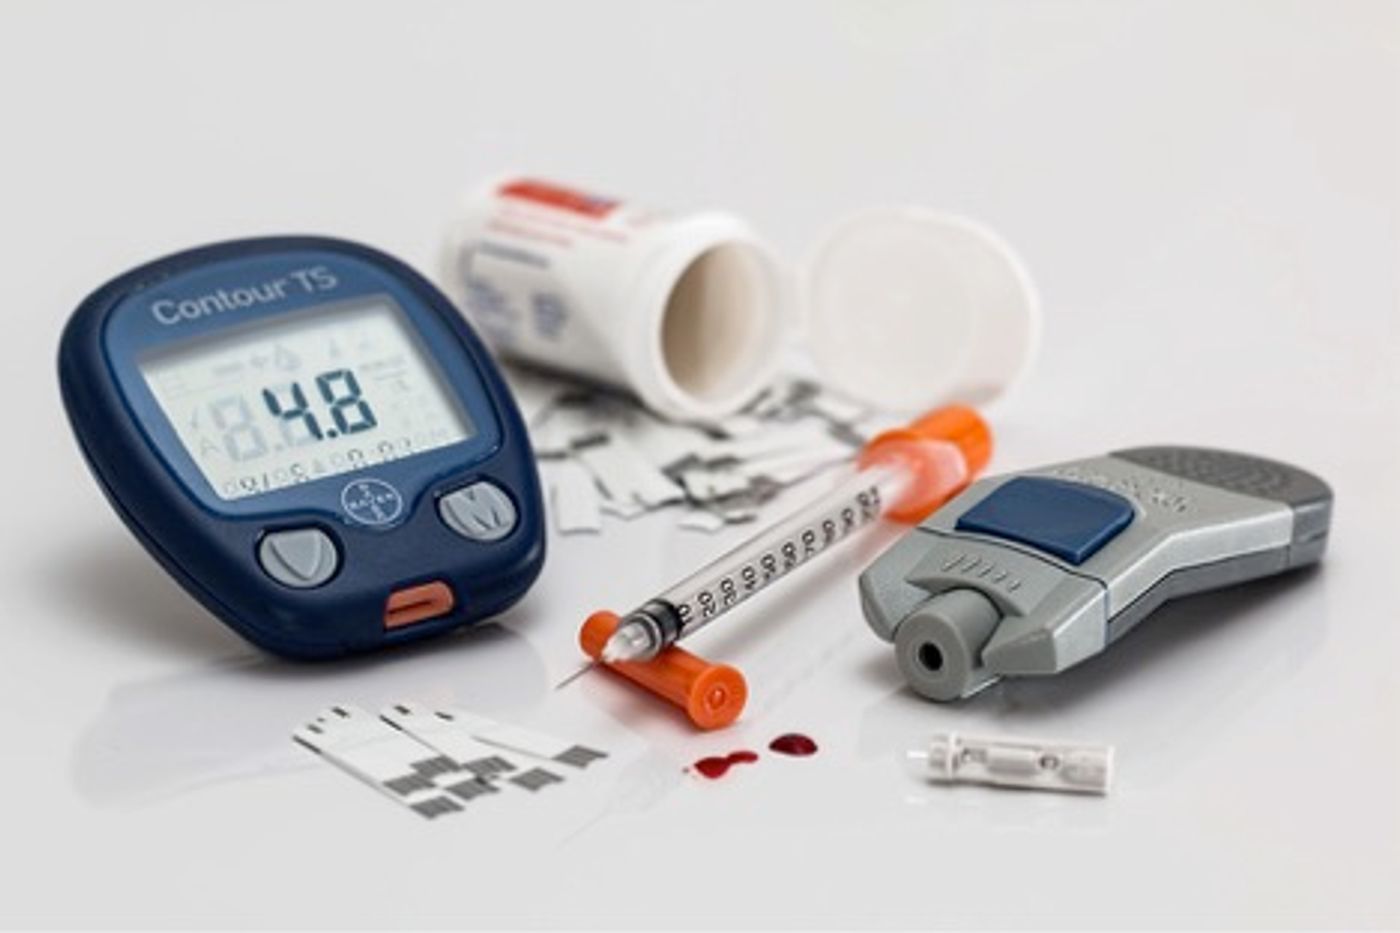 For nonprescription insulin, do the benefits outweigh the risks?